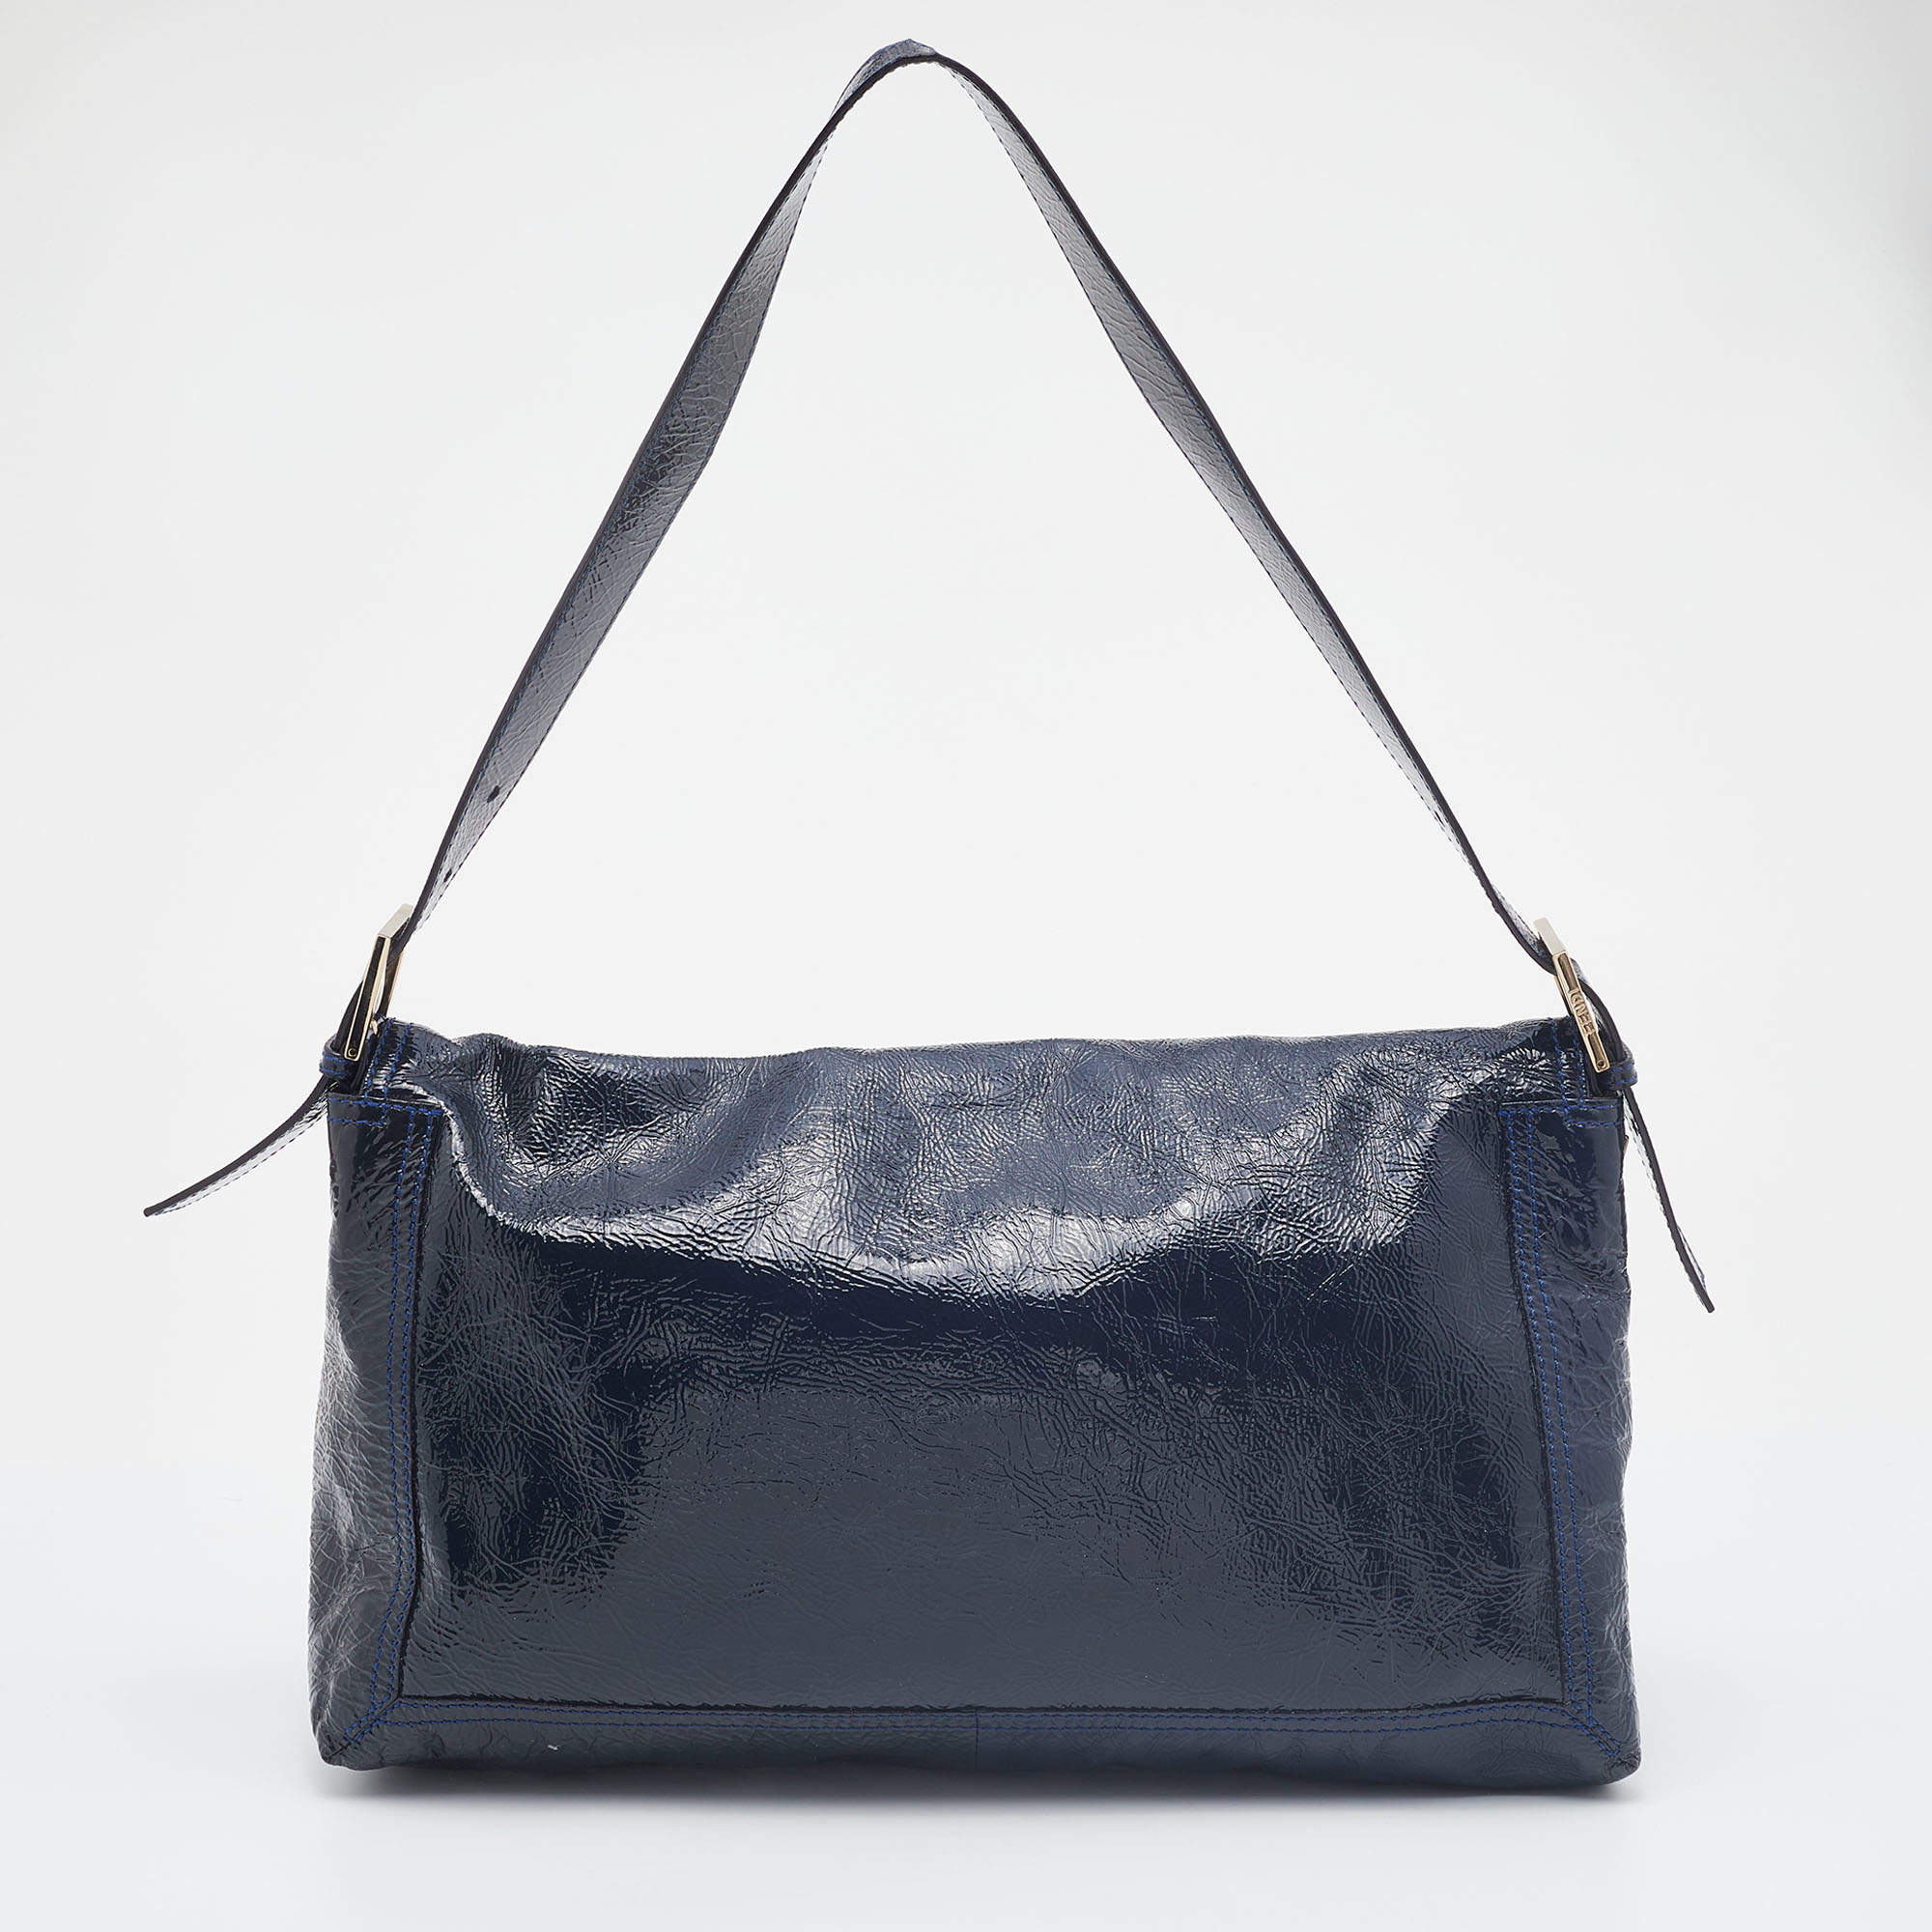 Fendi Navy Blue Patent Leather Maxi Baguette Shoulder Bag